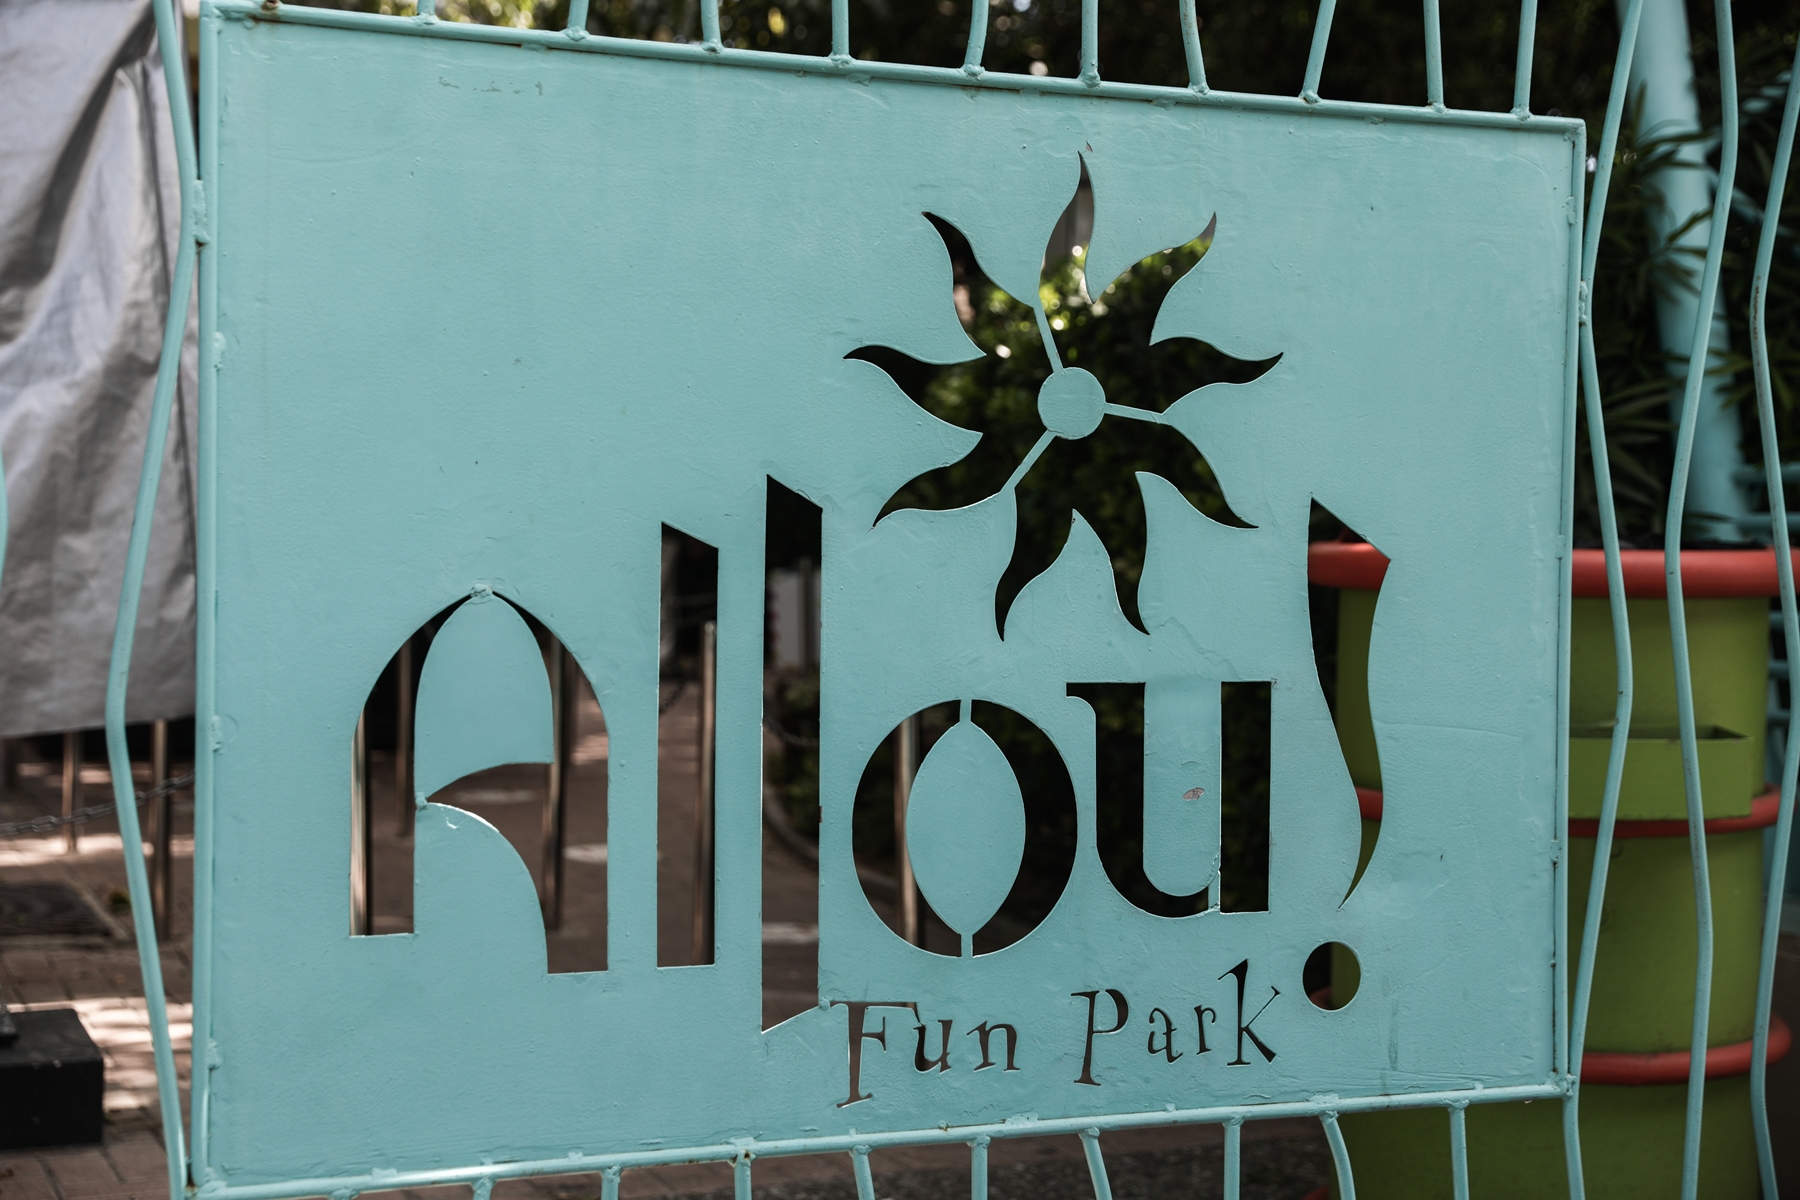 Allou Fun Park ατύχημα: Η 22χρονη που τραυματίστηκε μιλά για το μοιραίο βράδυ